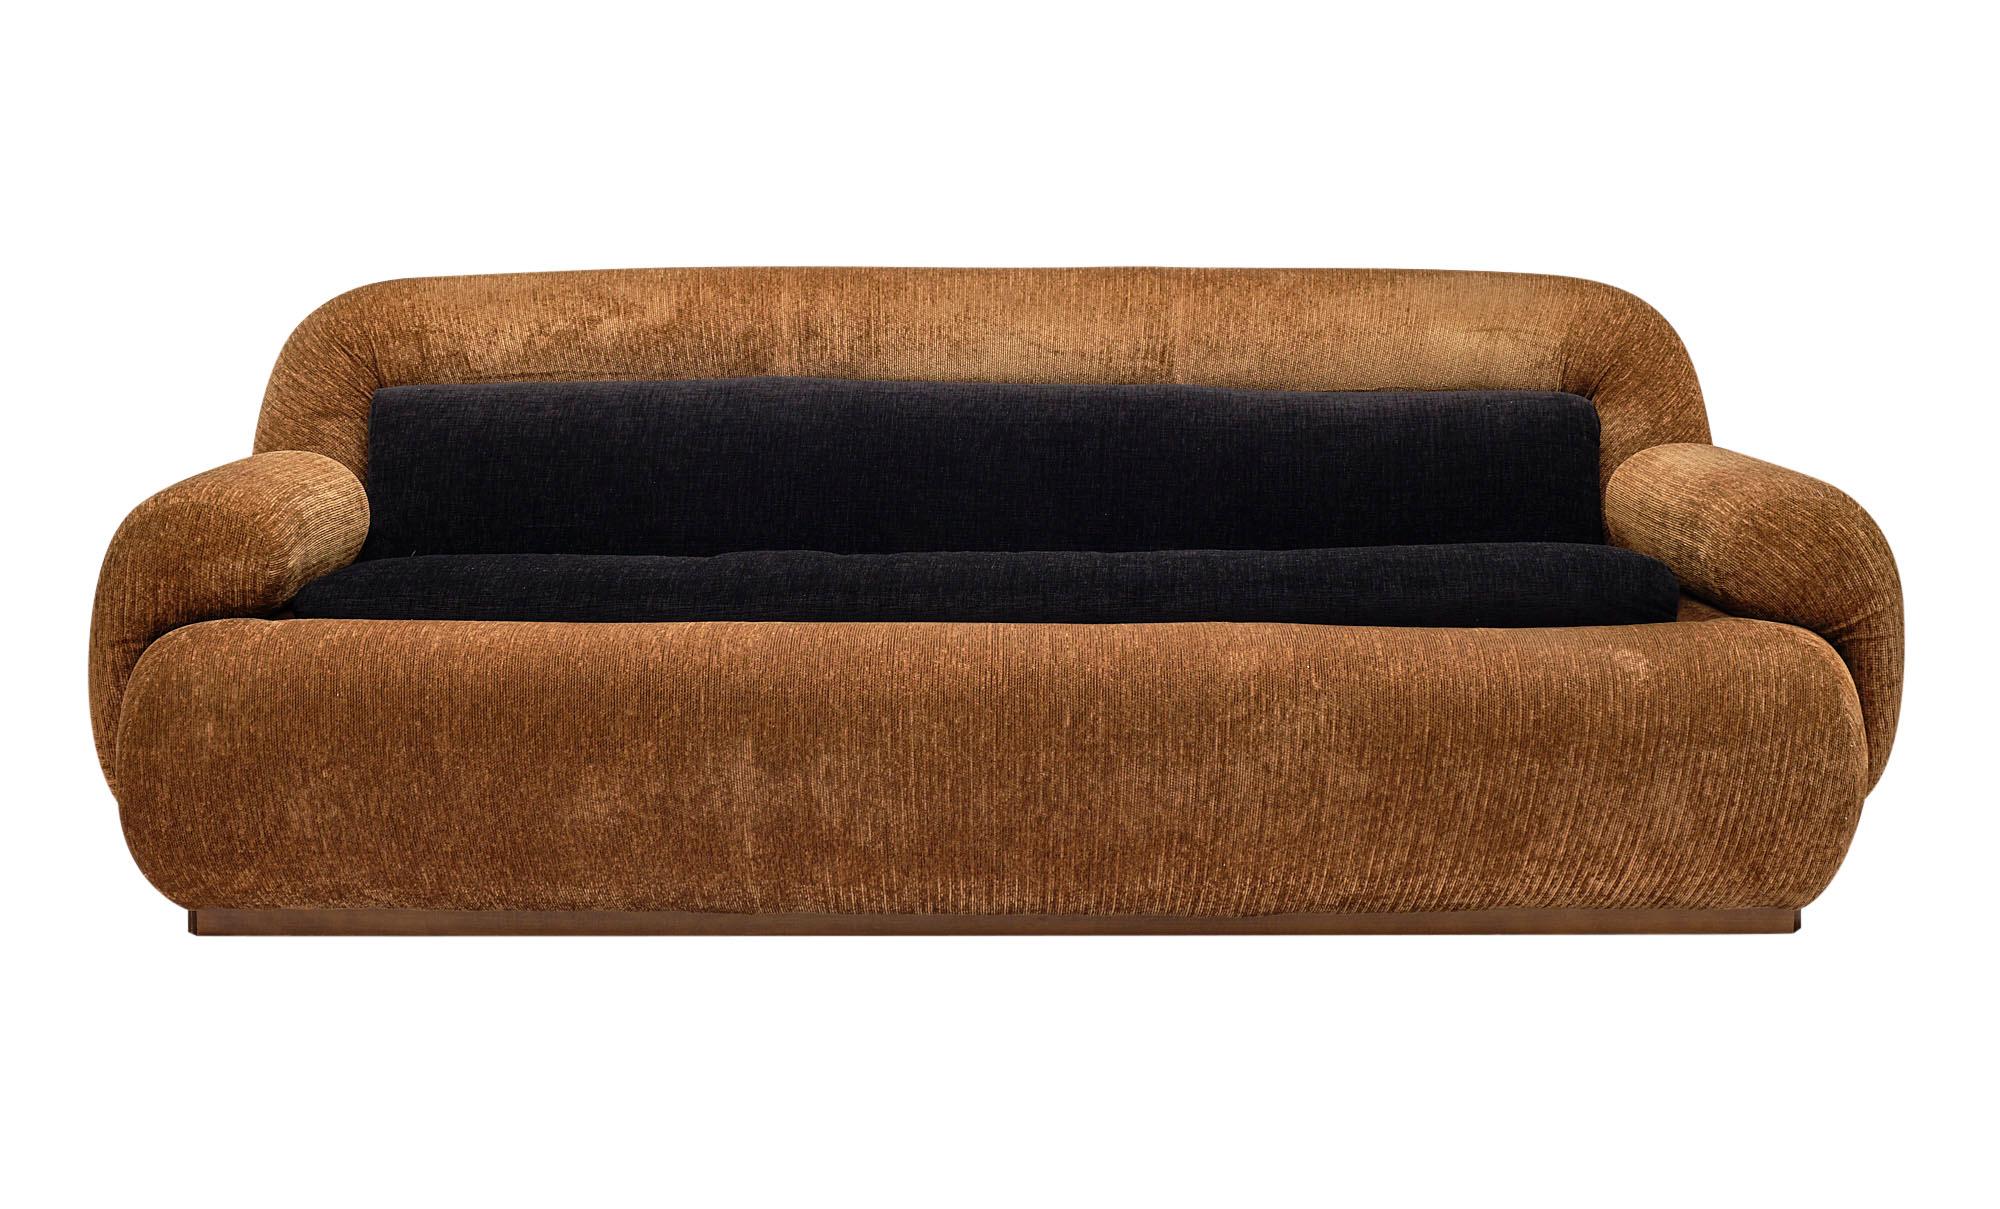 Late 20th Century Italian Mid-Century Modern Sofa For Sale